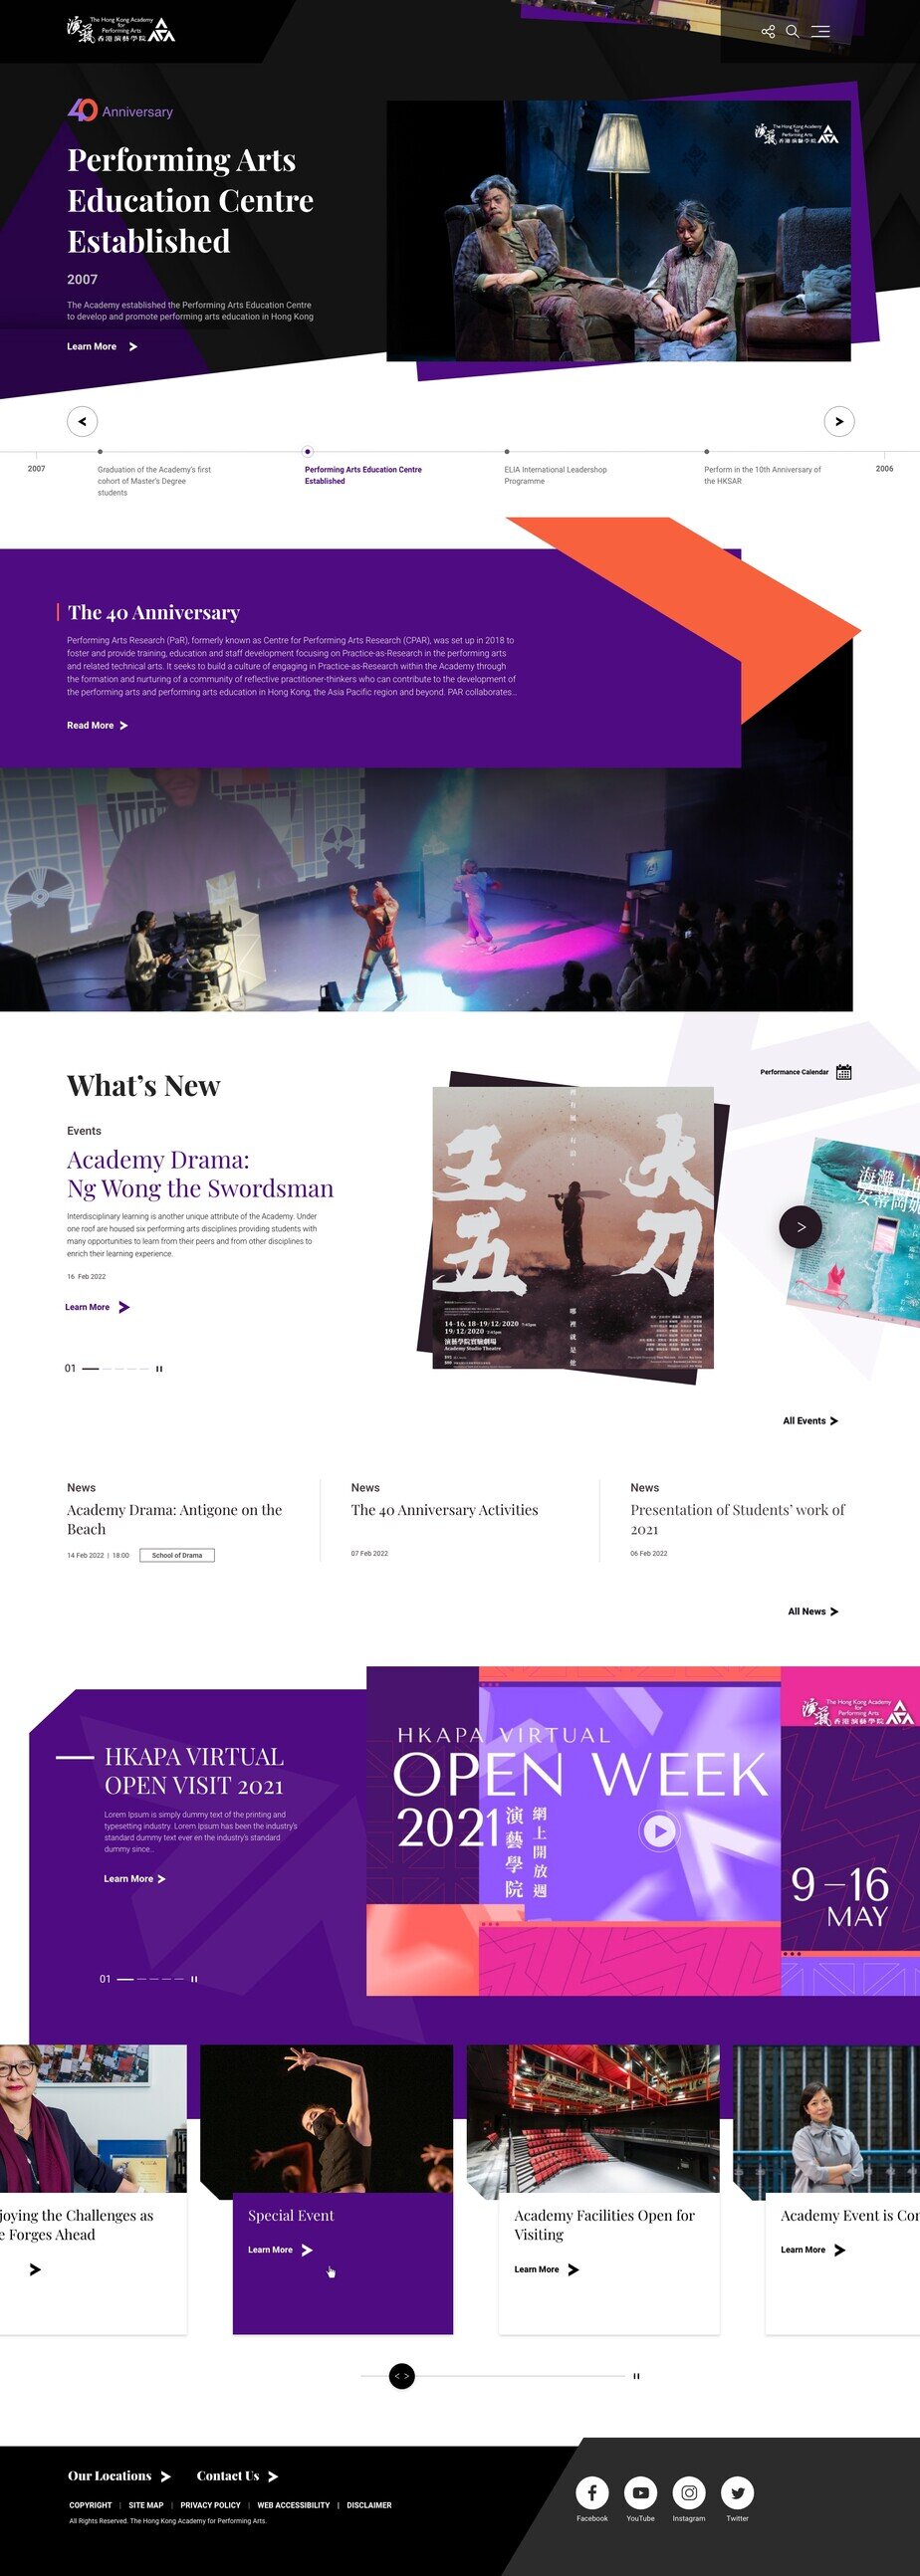 Hong Kong Academy for Performing Arts website screenshot for desktop version 3 of 7